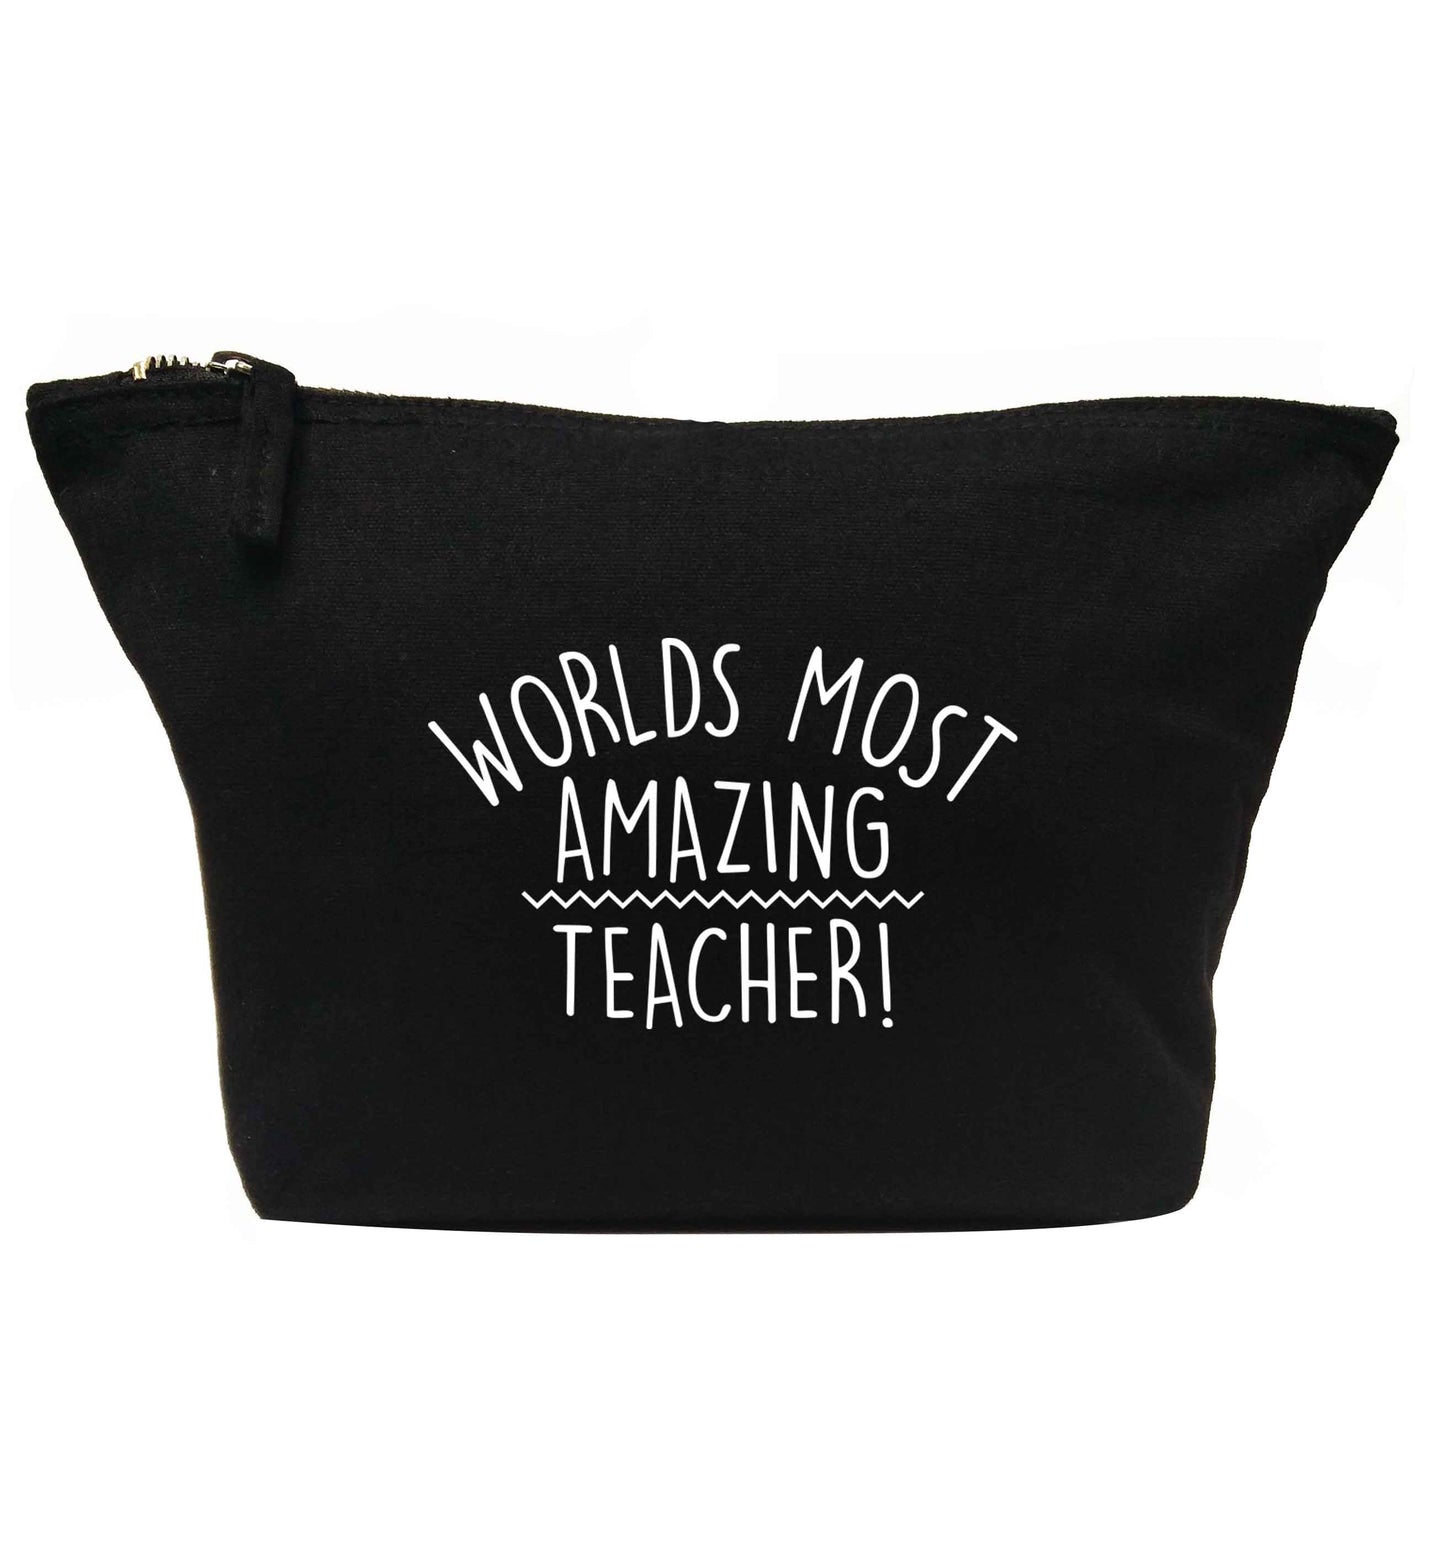 Worlds most amazing teacher | Makeup / wash bag